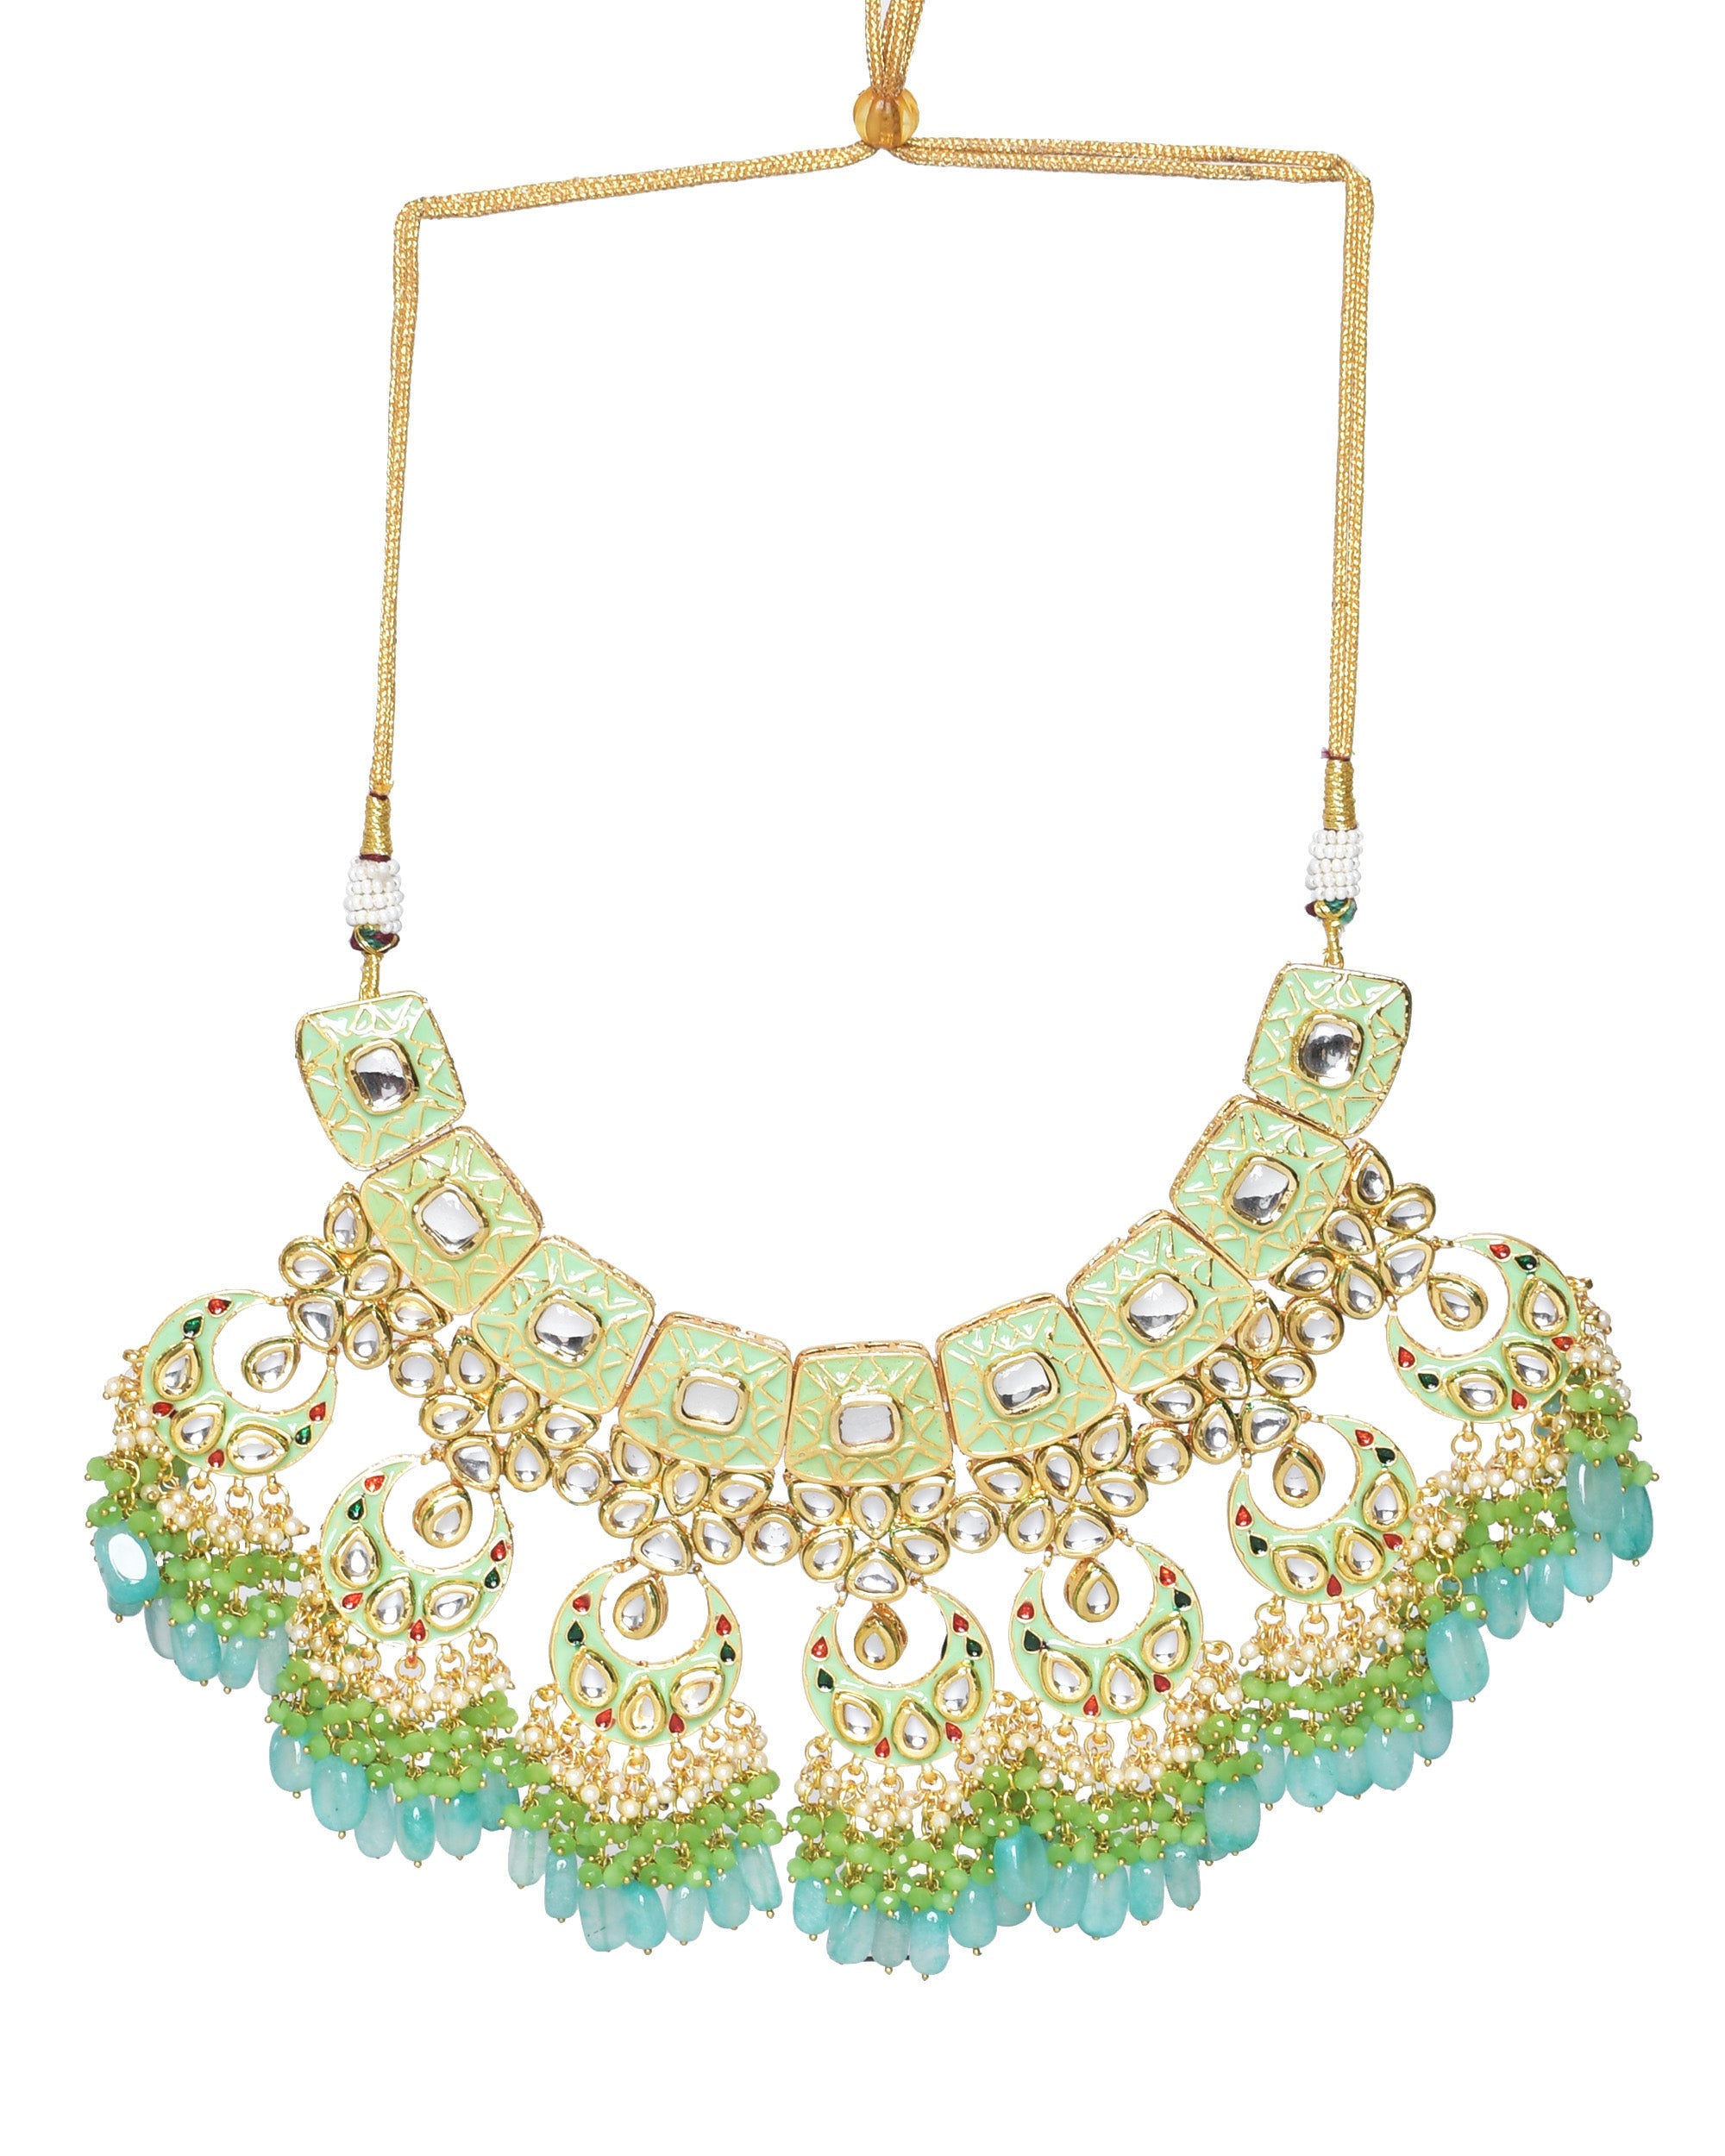 Green enameled Kundan Maharani Necklace and earrings with Maang Tikka